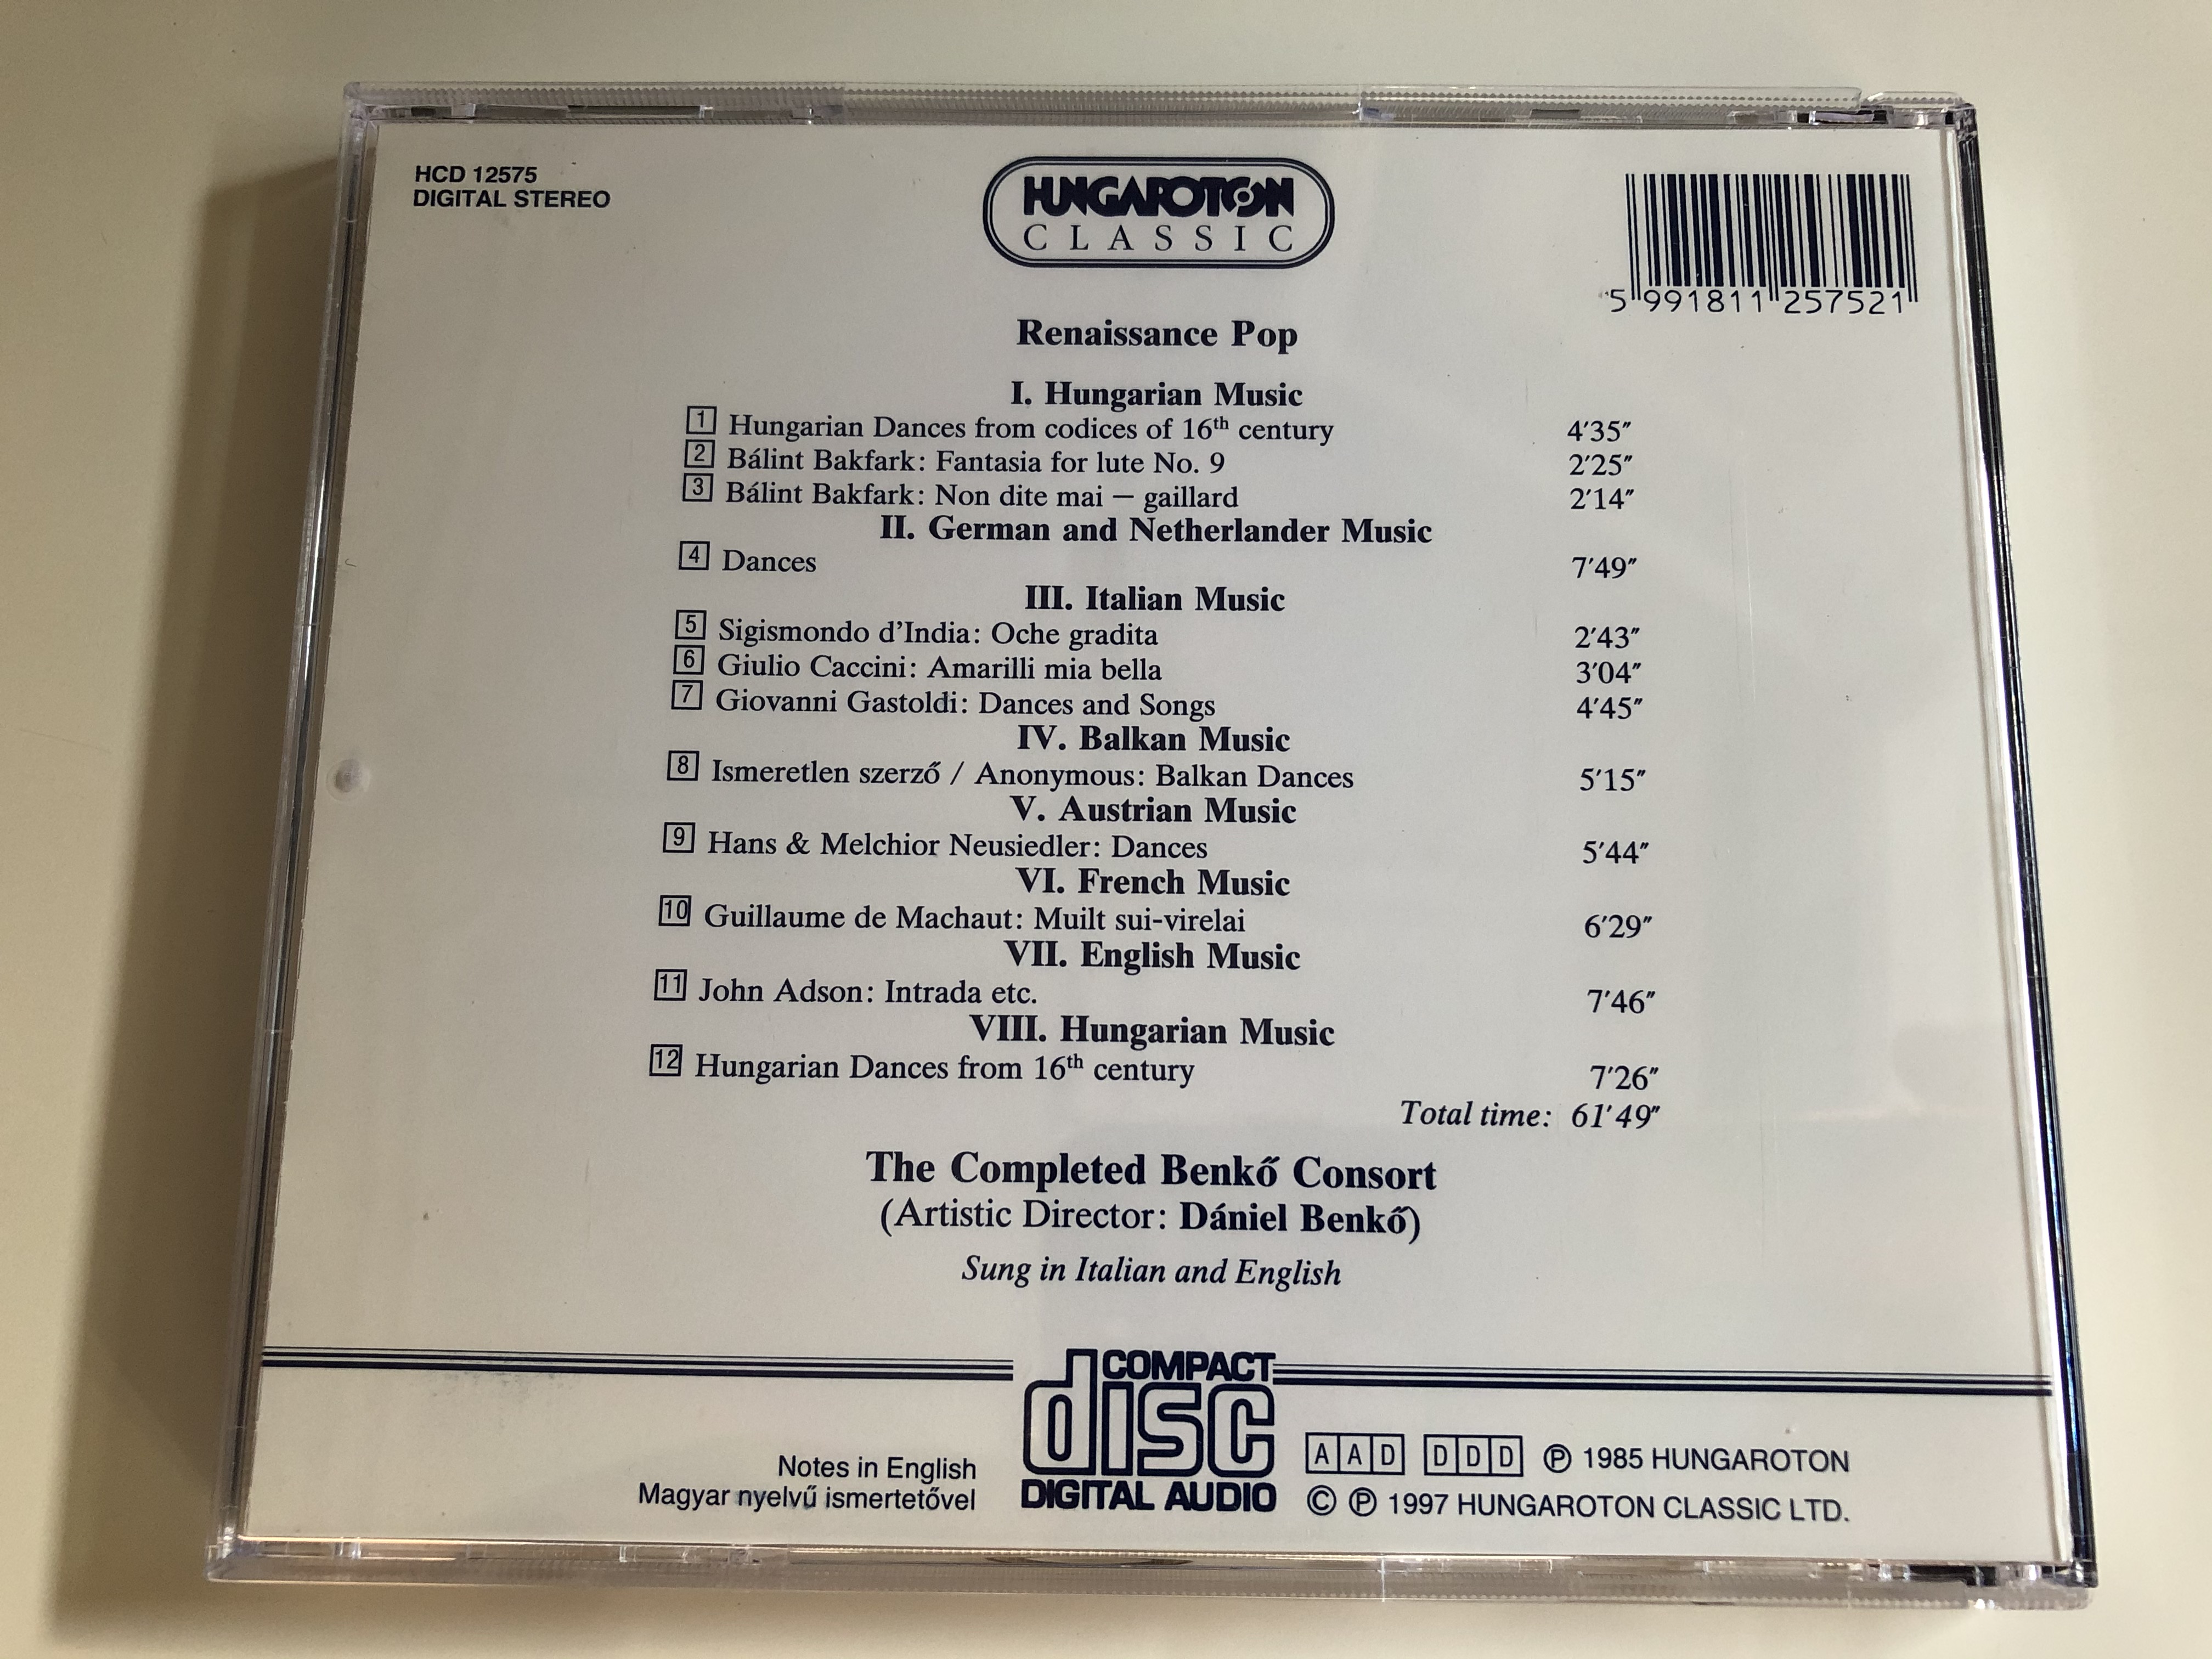 renaissance-pop-benk-consort-directed-by-daniel-benko-hungaroton-classic-audio-cd-1997-stereo-hcd-12575-10-.jpg